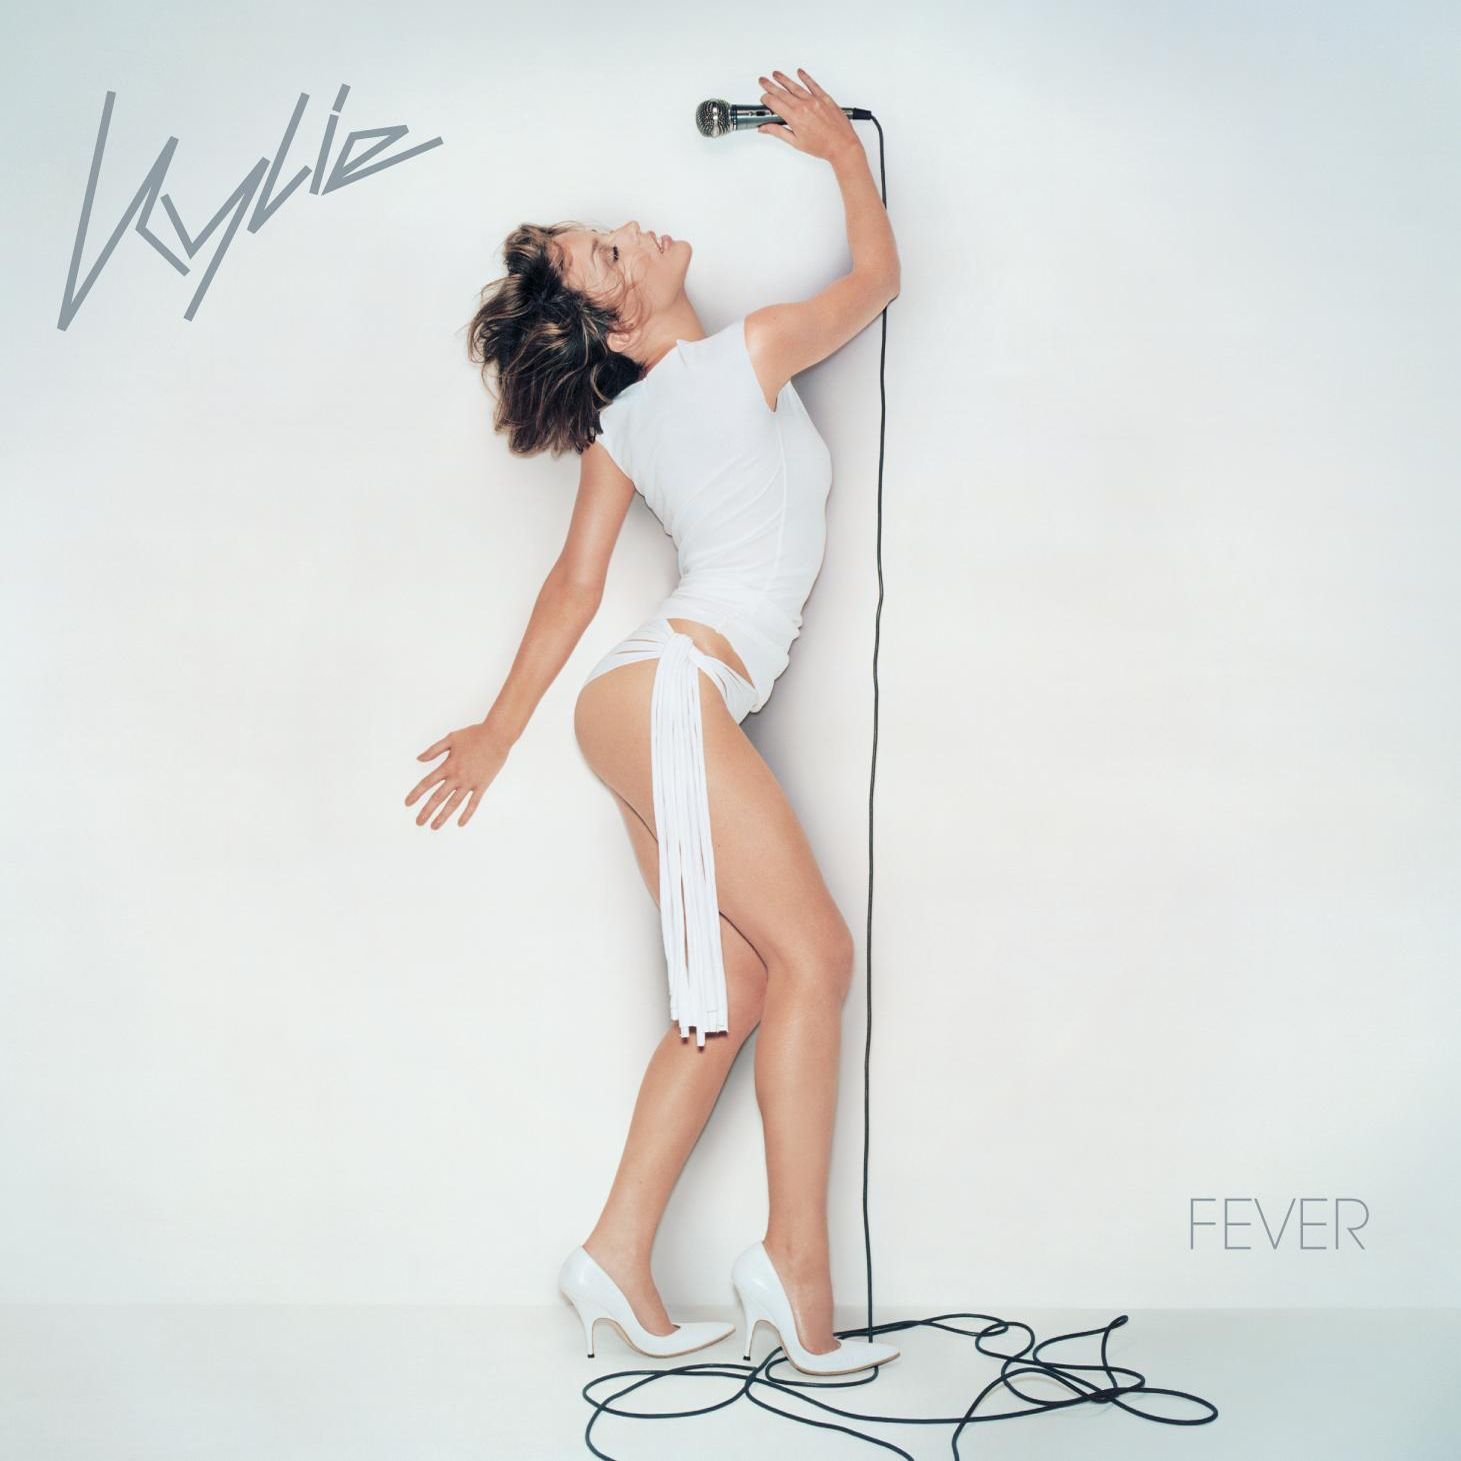 Kylie Minogue "Fever" LP